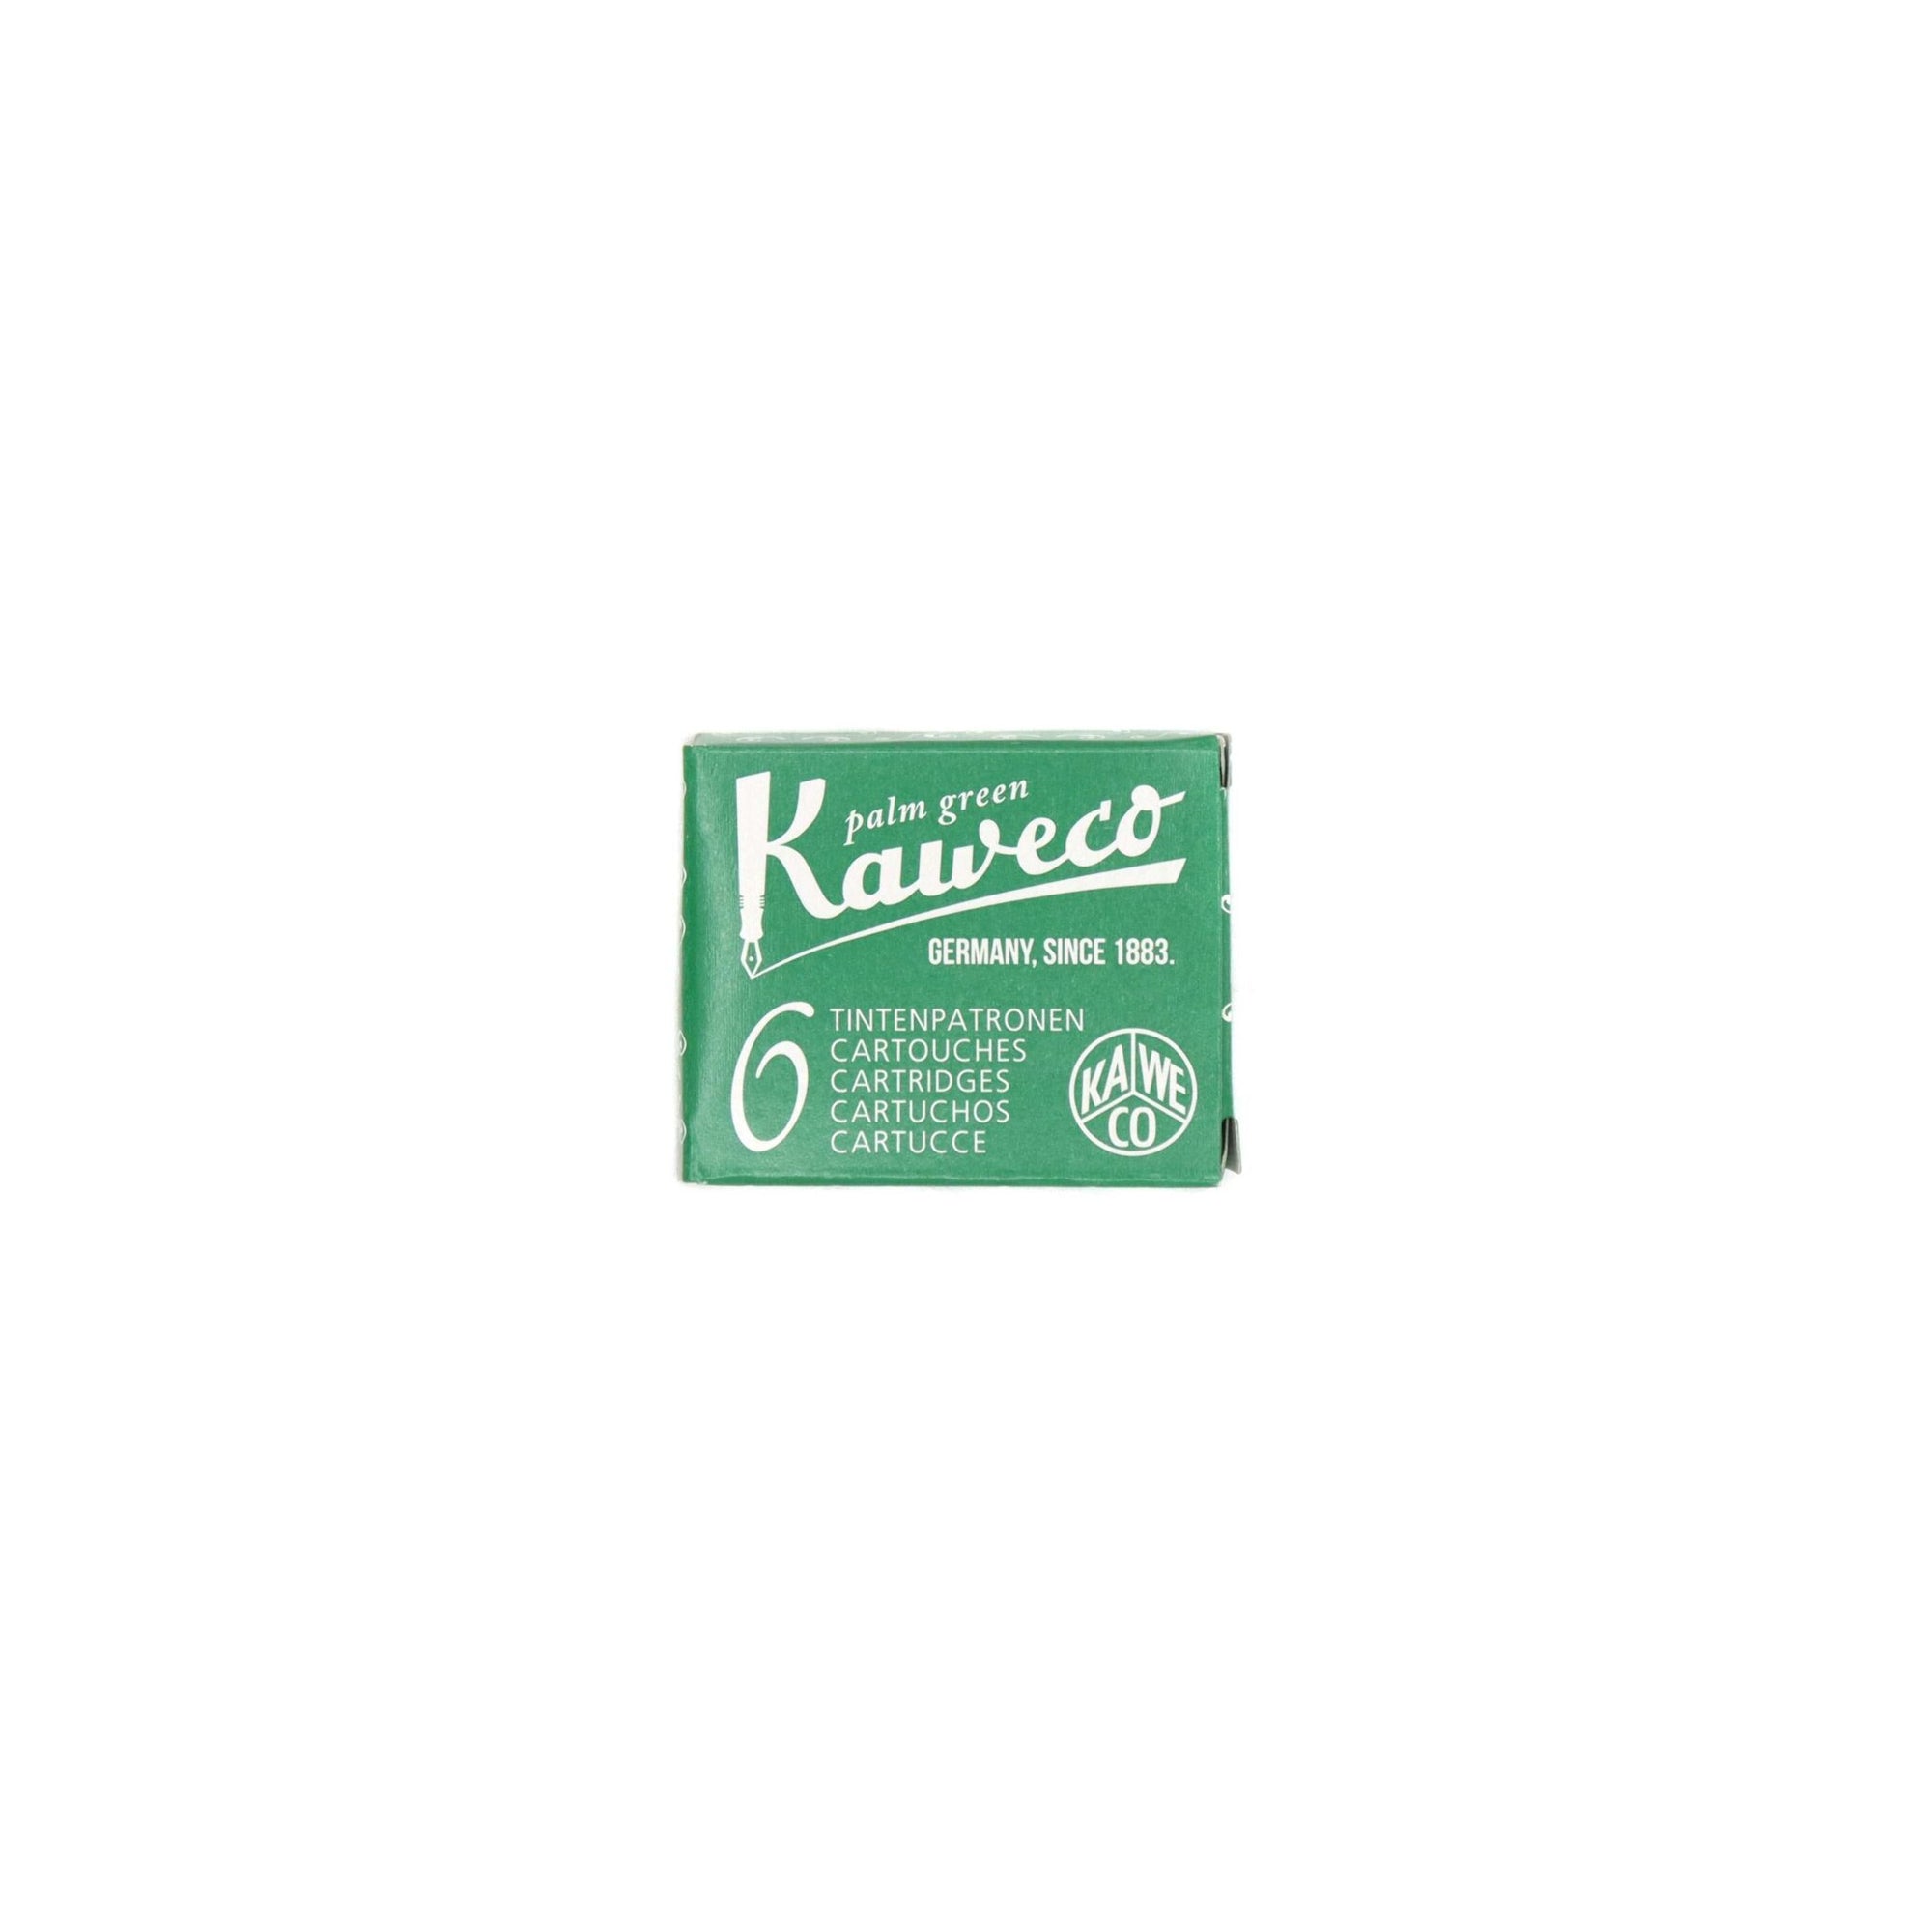 Kaweco Tintenpatronen 6-Pack grün